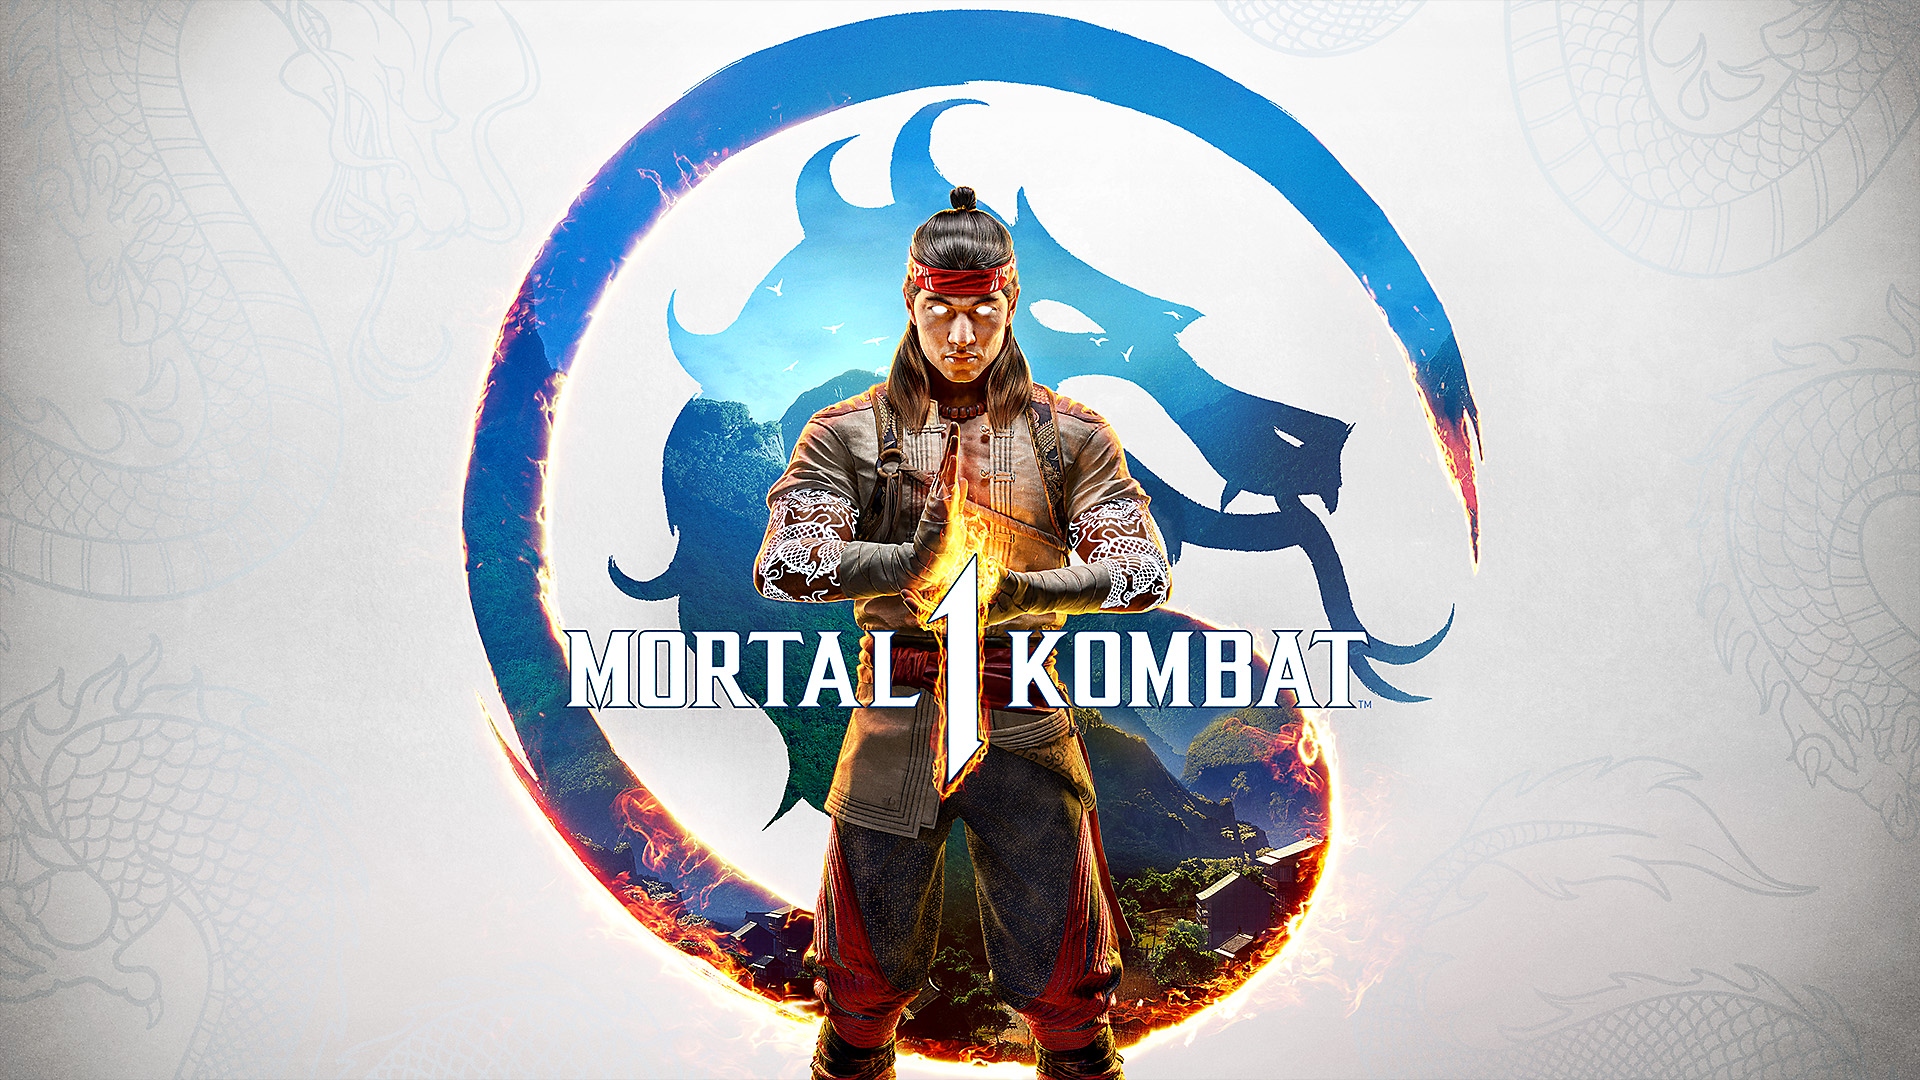 Mortal Kombat 1 - Official Launch Trailer | PS5 Games